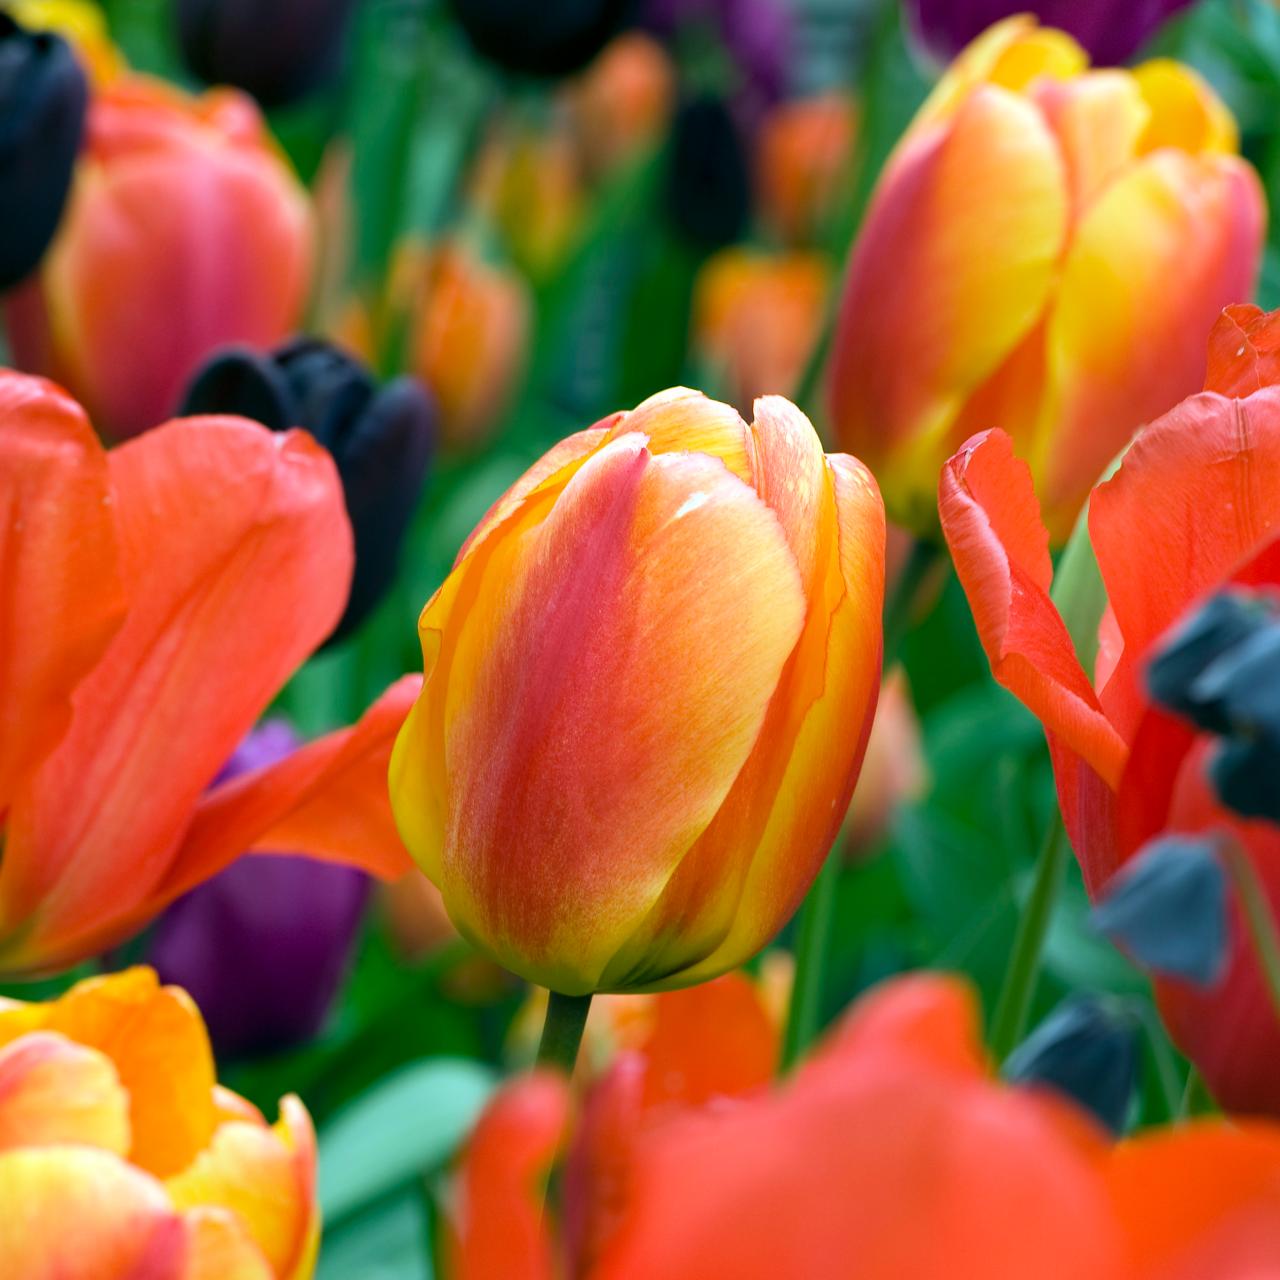 Tulip popular flower meanings